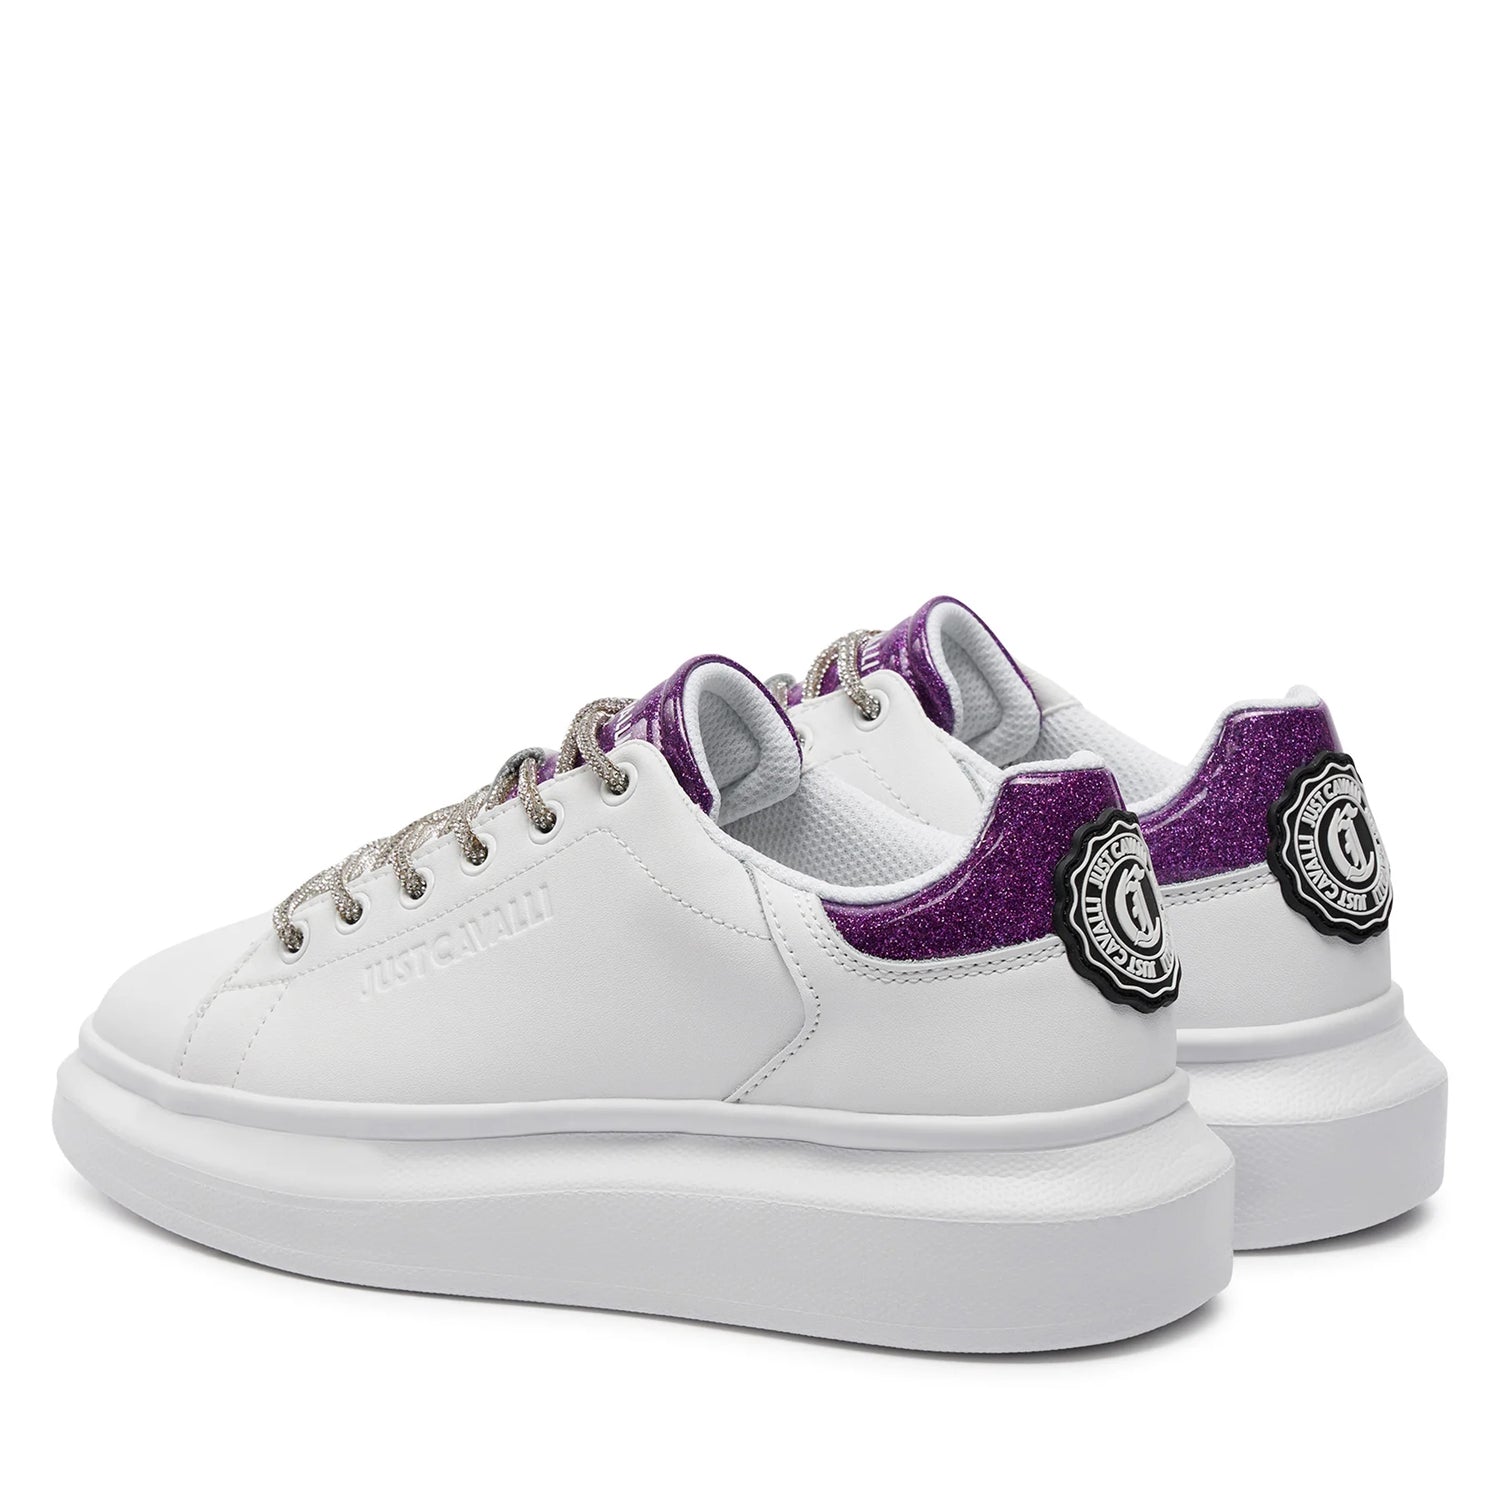 Just Cavalli Sapatilhas Sneakers Shoes 76ra3sb1 White Lila Branco Lilac_shot2